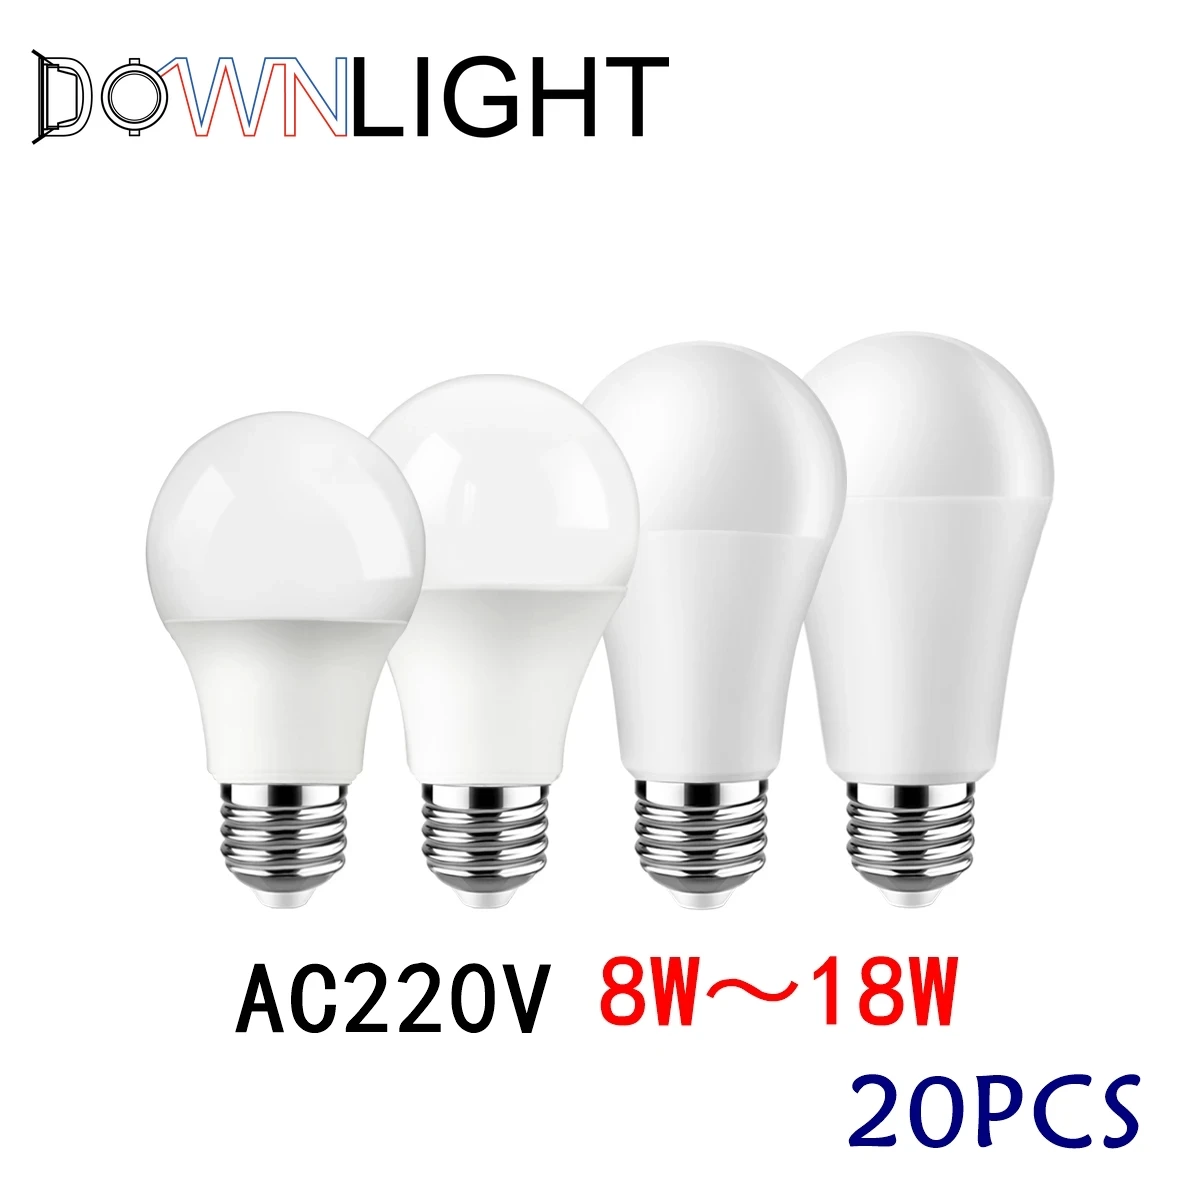 20PC Led bulb AC 220V-240V A60 Large Power 8W -18W B22 E27 bombilla lampara led bulb Super bright for kitchen, living room